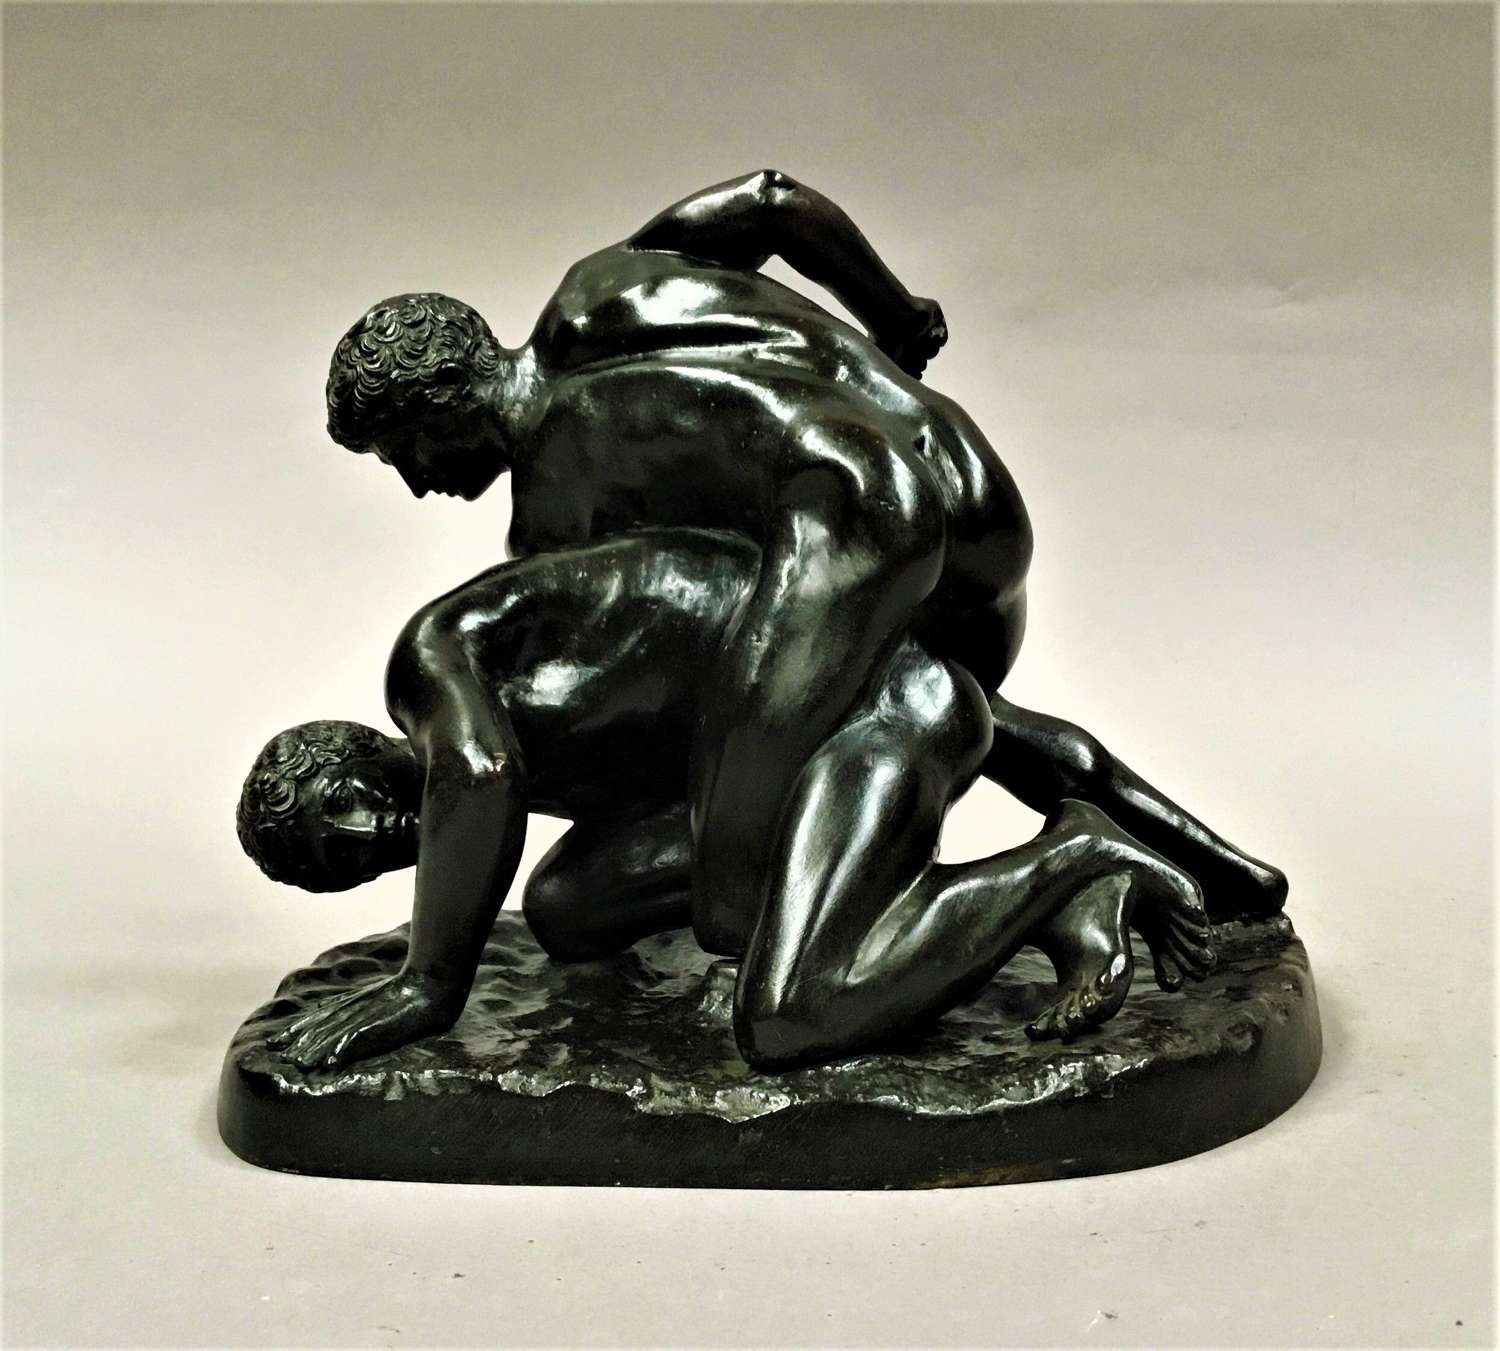 C19th bronze Grand Tour sculpture of the Uffizi Wrestlers